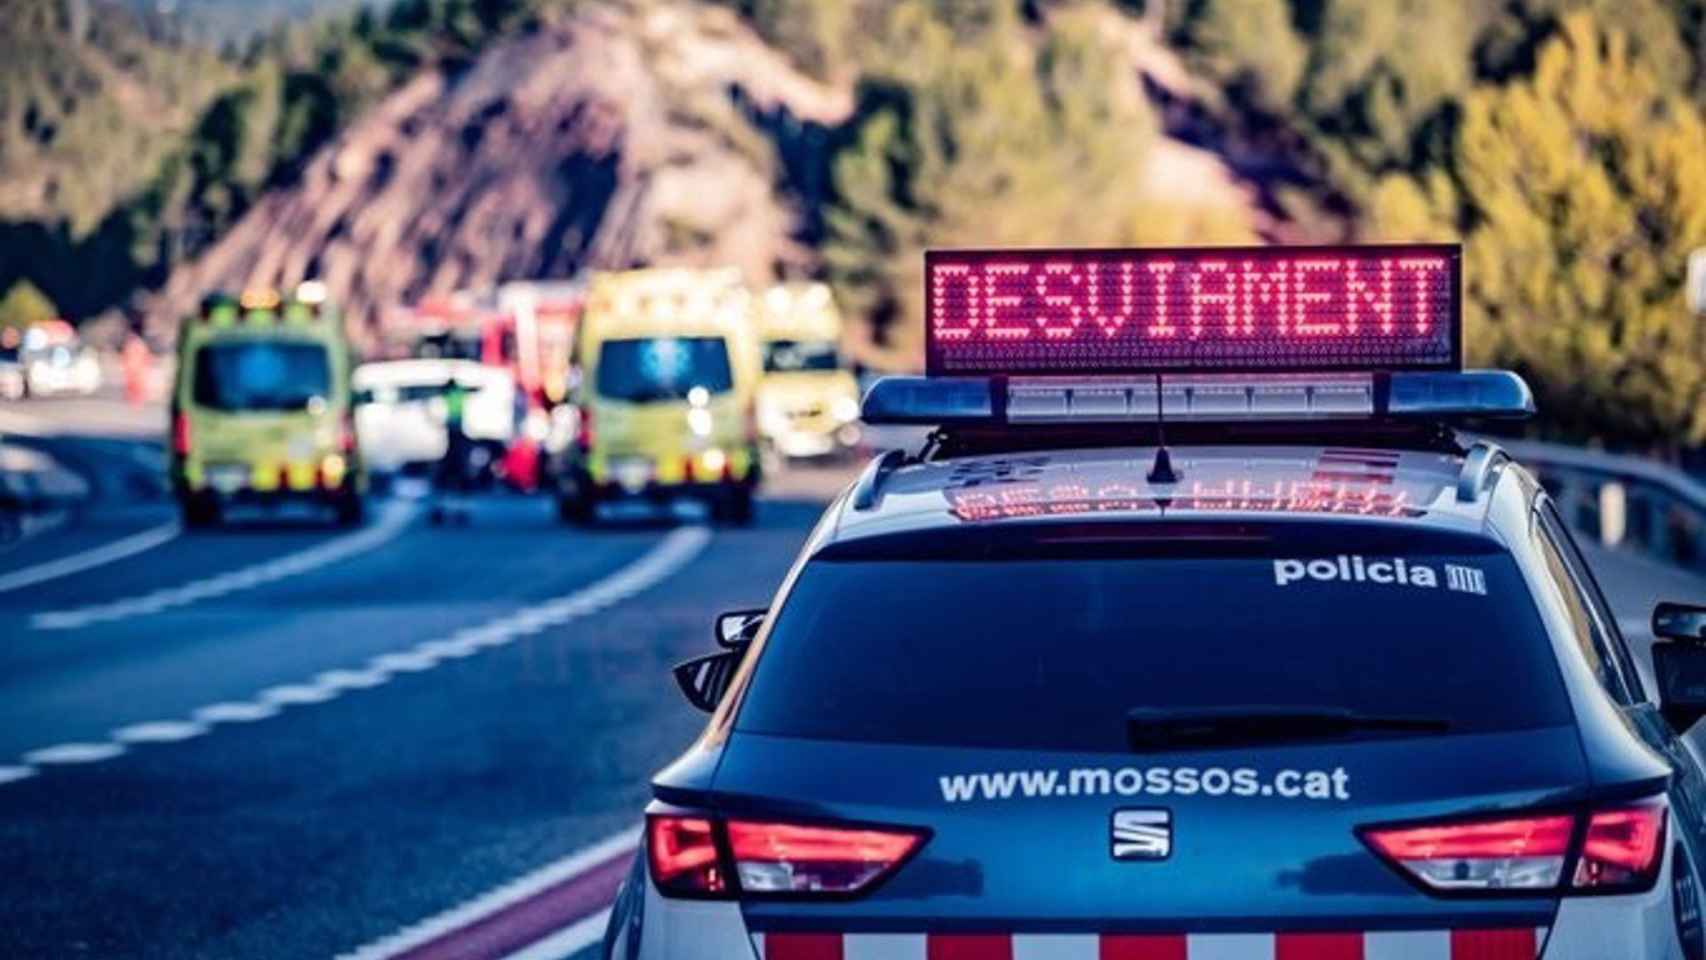 Un coche de Mossos d'Esquadra y ambulancias del Sistema d'Emergències Mèdiques (SEM) durante un accidente de tráfico en una imagen de archivo / SCT